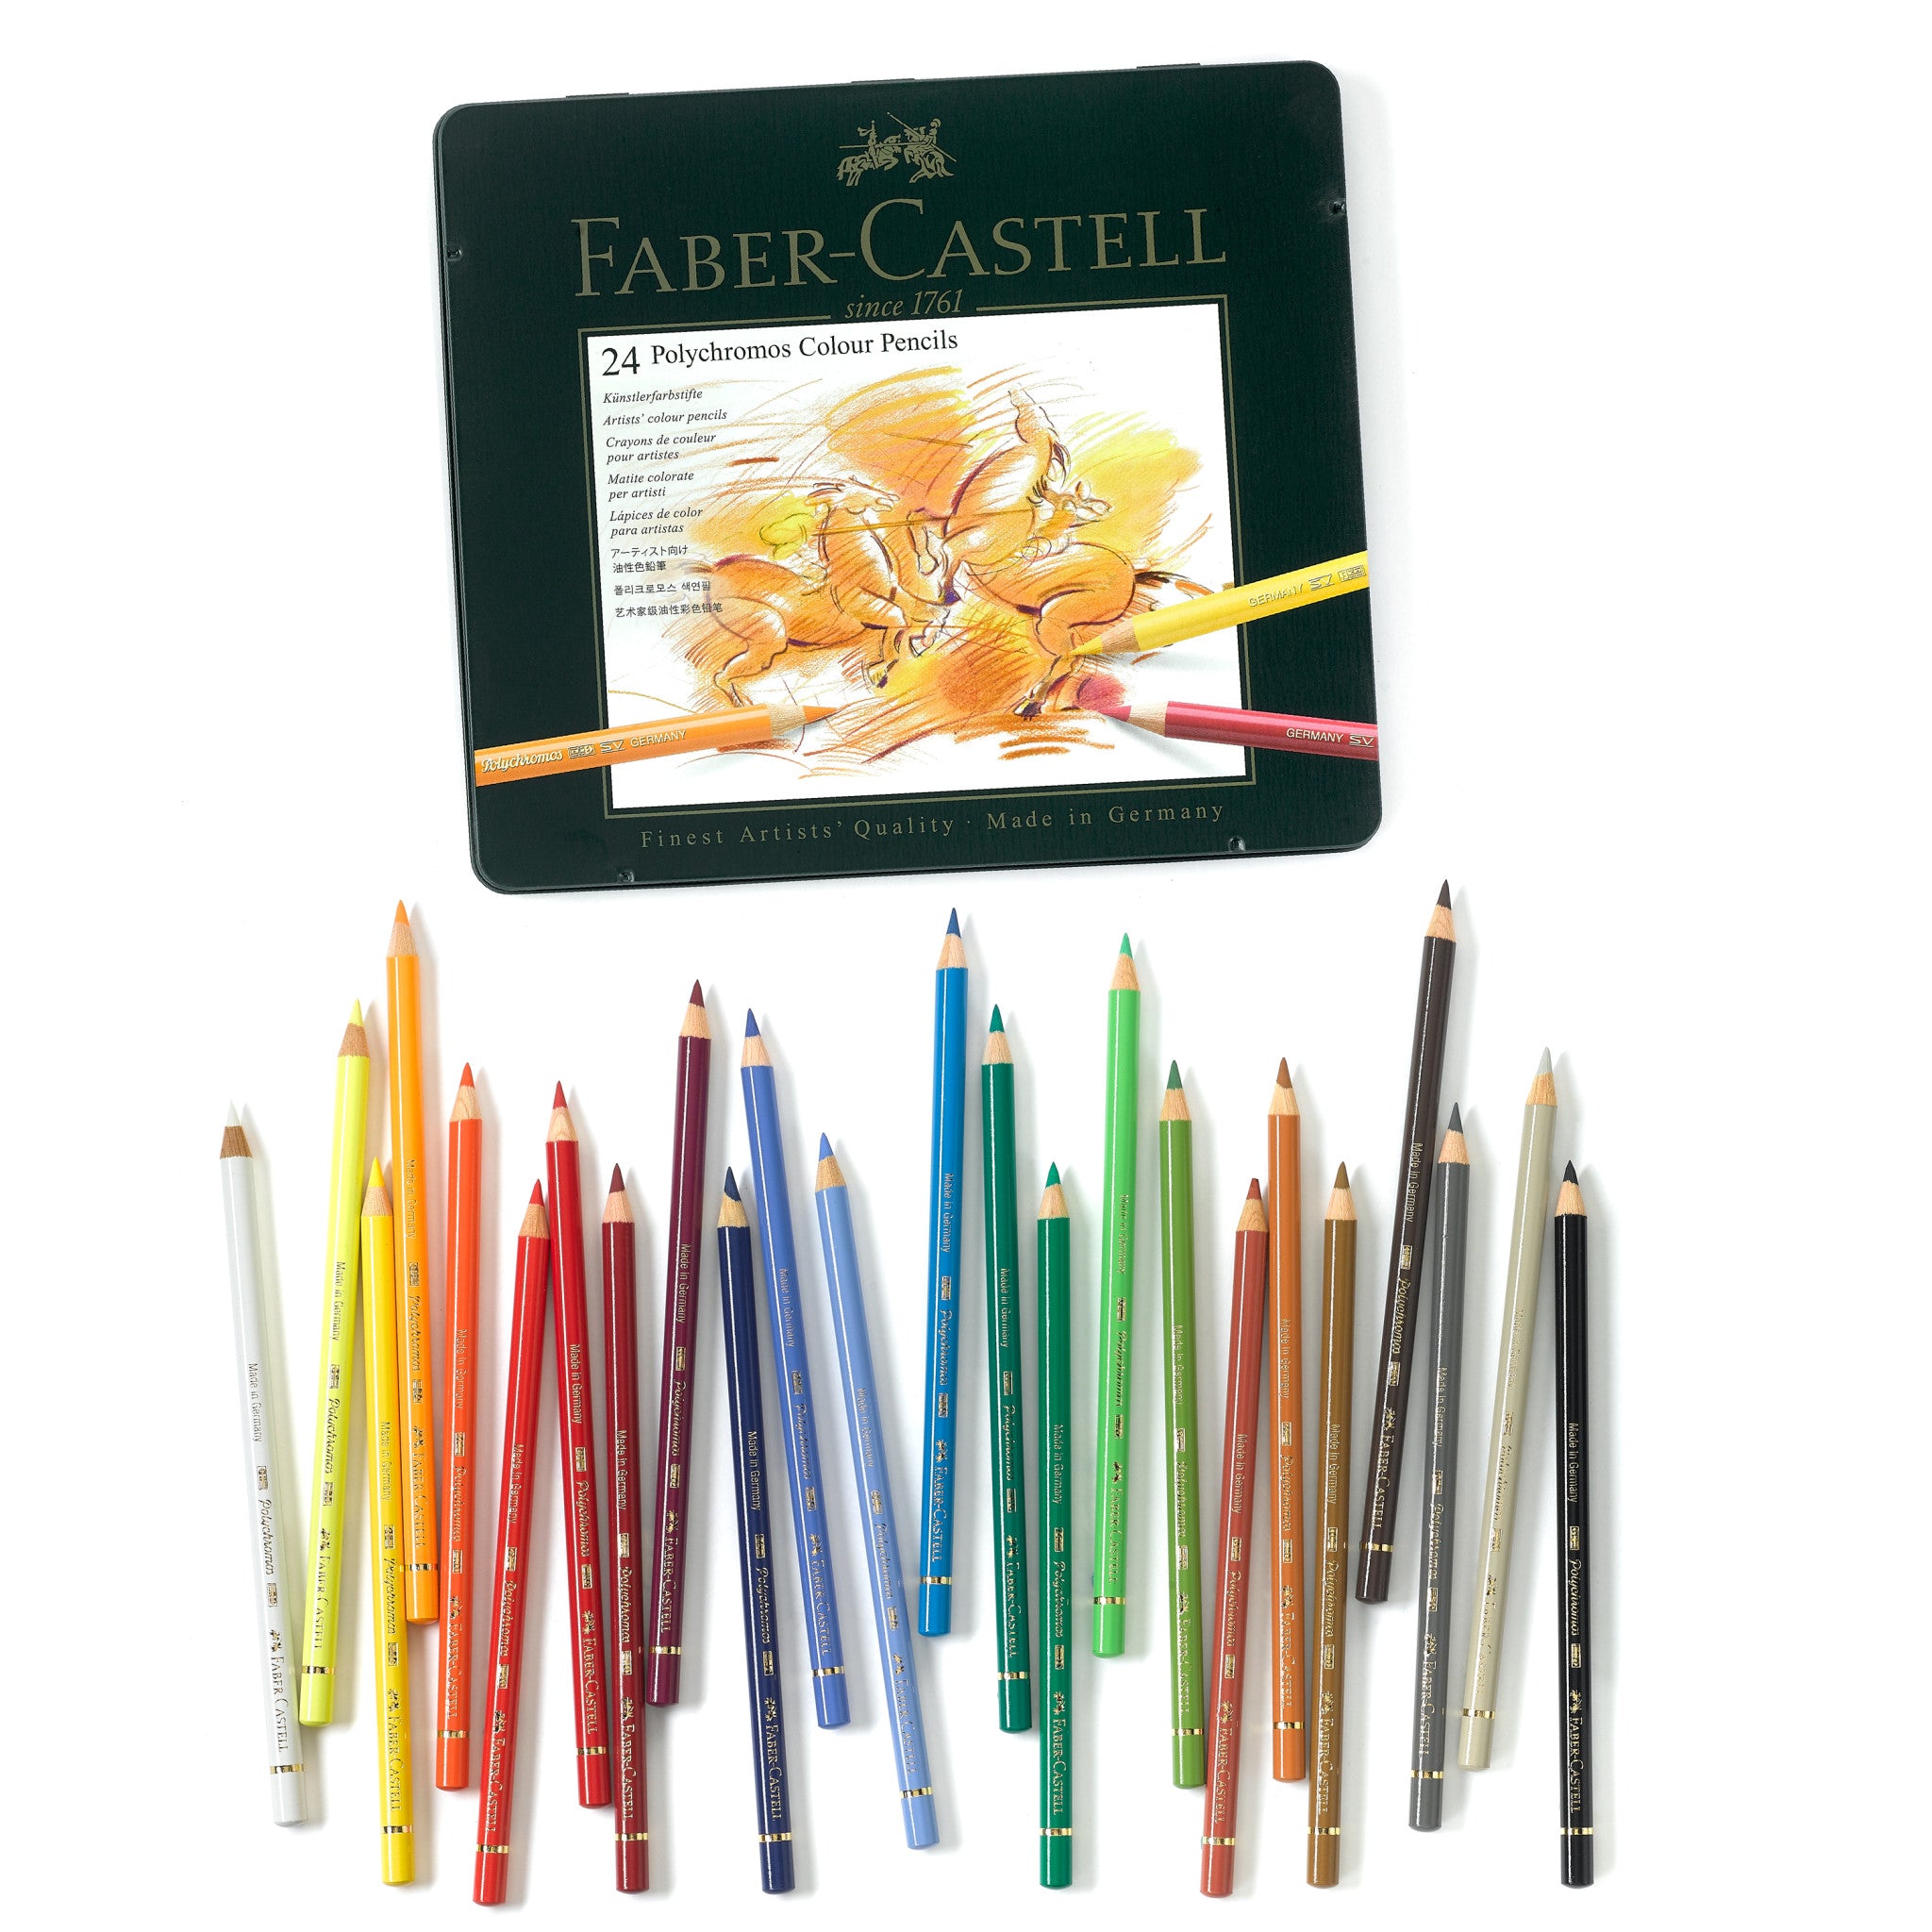 Coloring pencils Polychromos 24-set